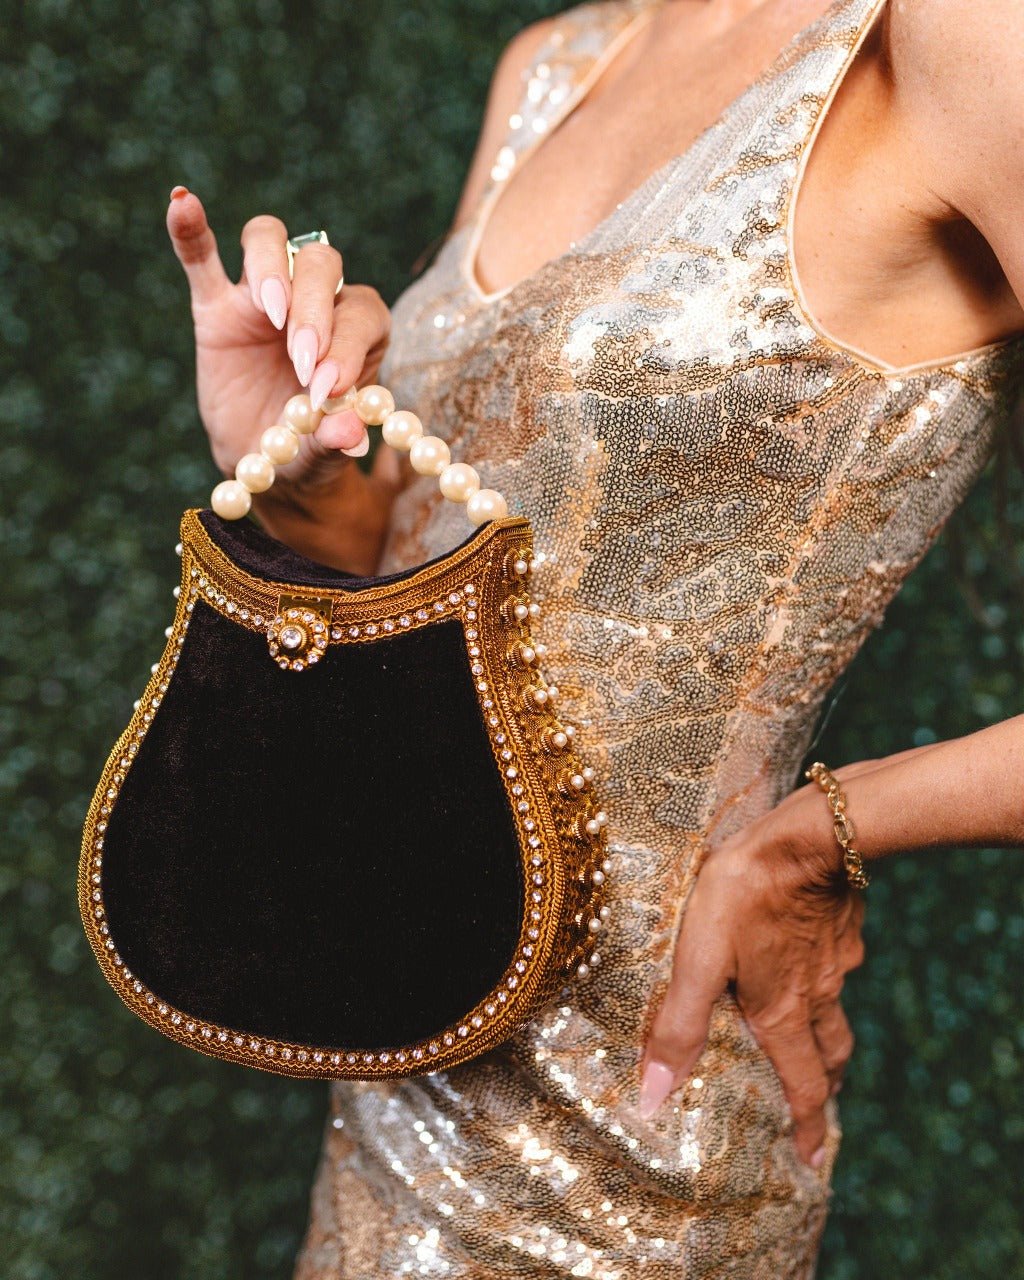 Ornate Satin & Crystal Handbag with Pearl Handle - Pink